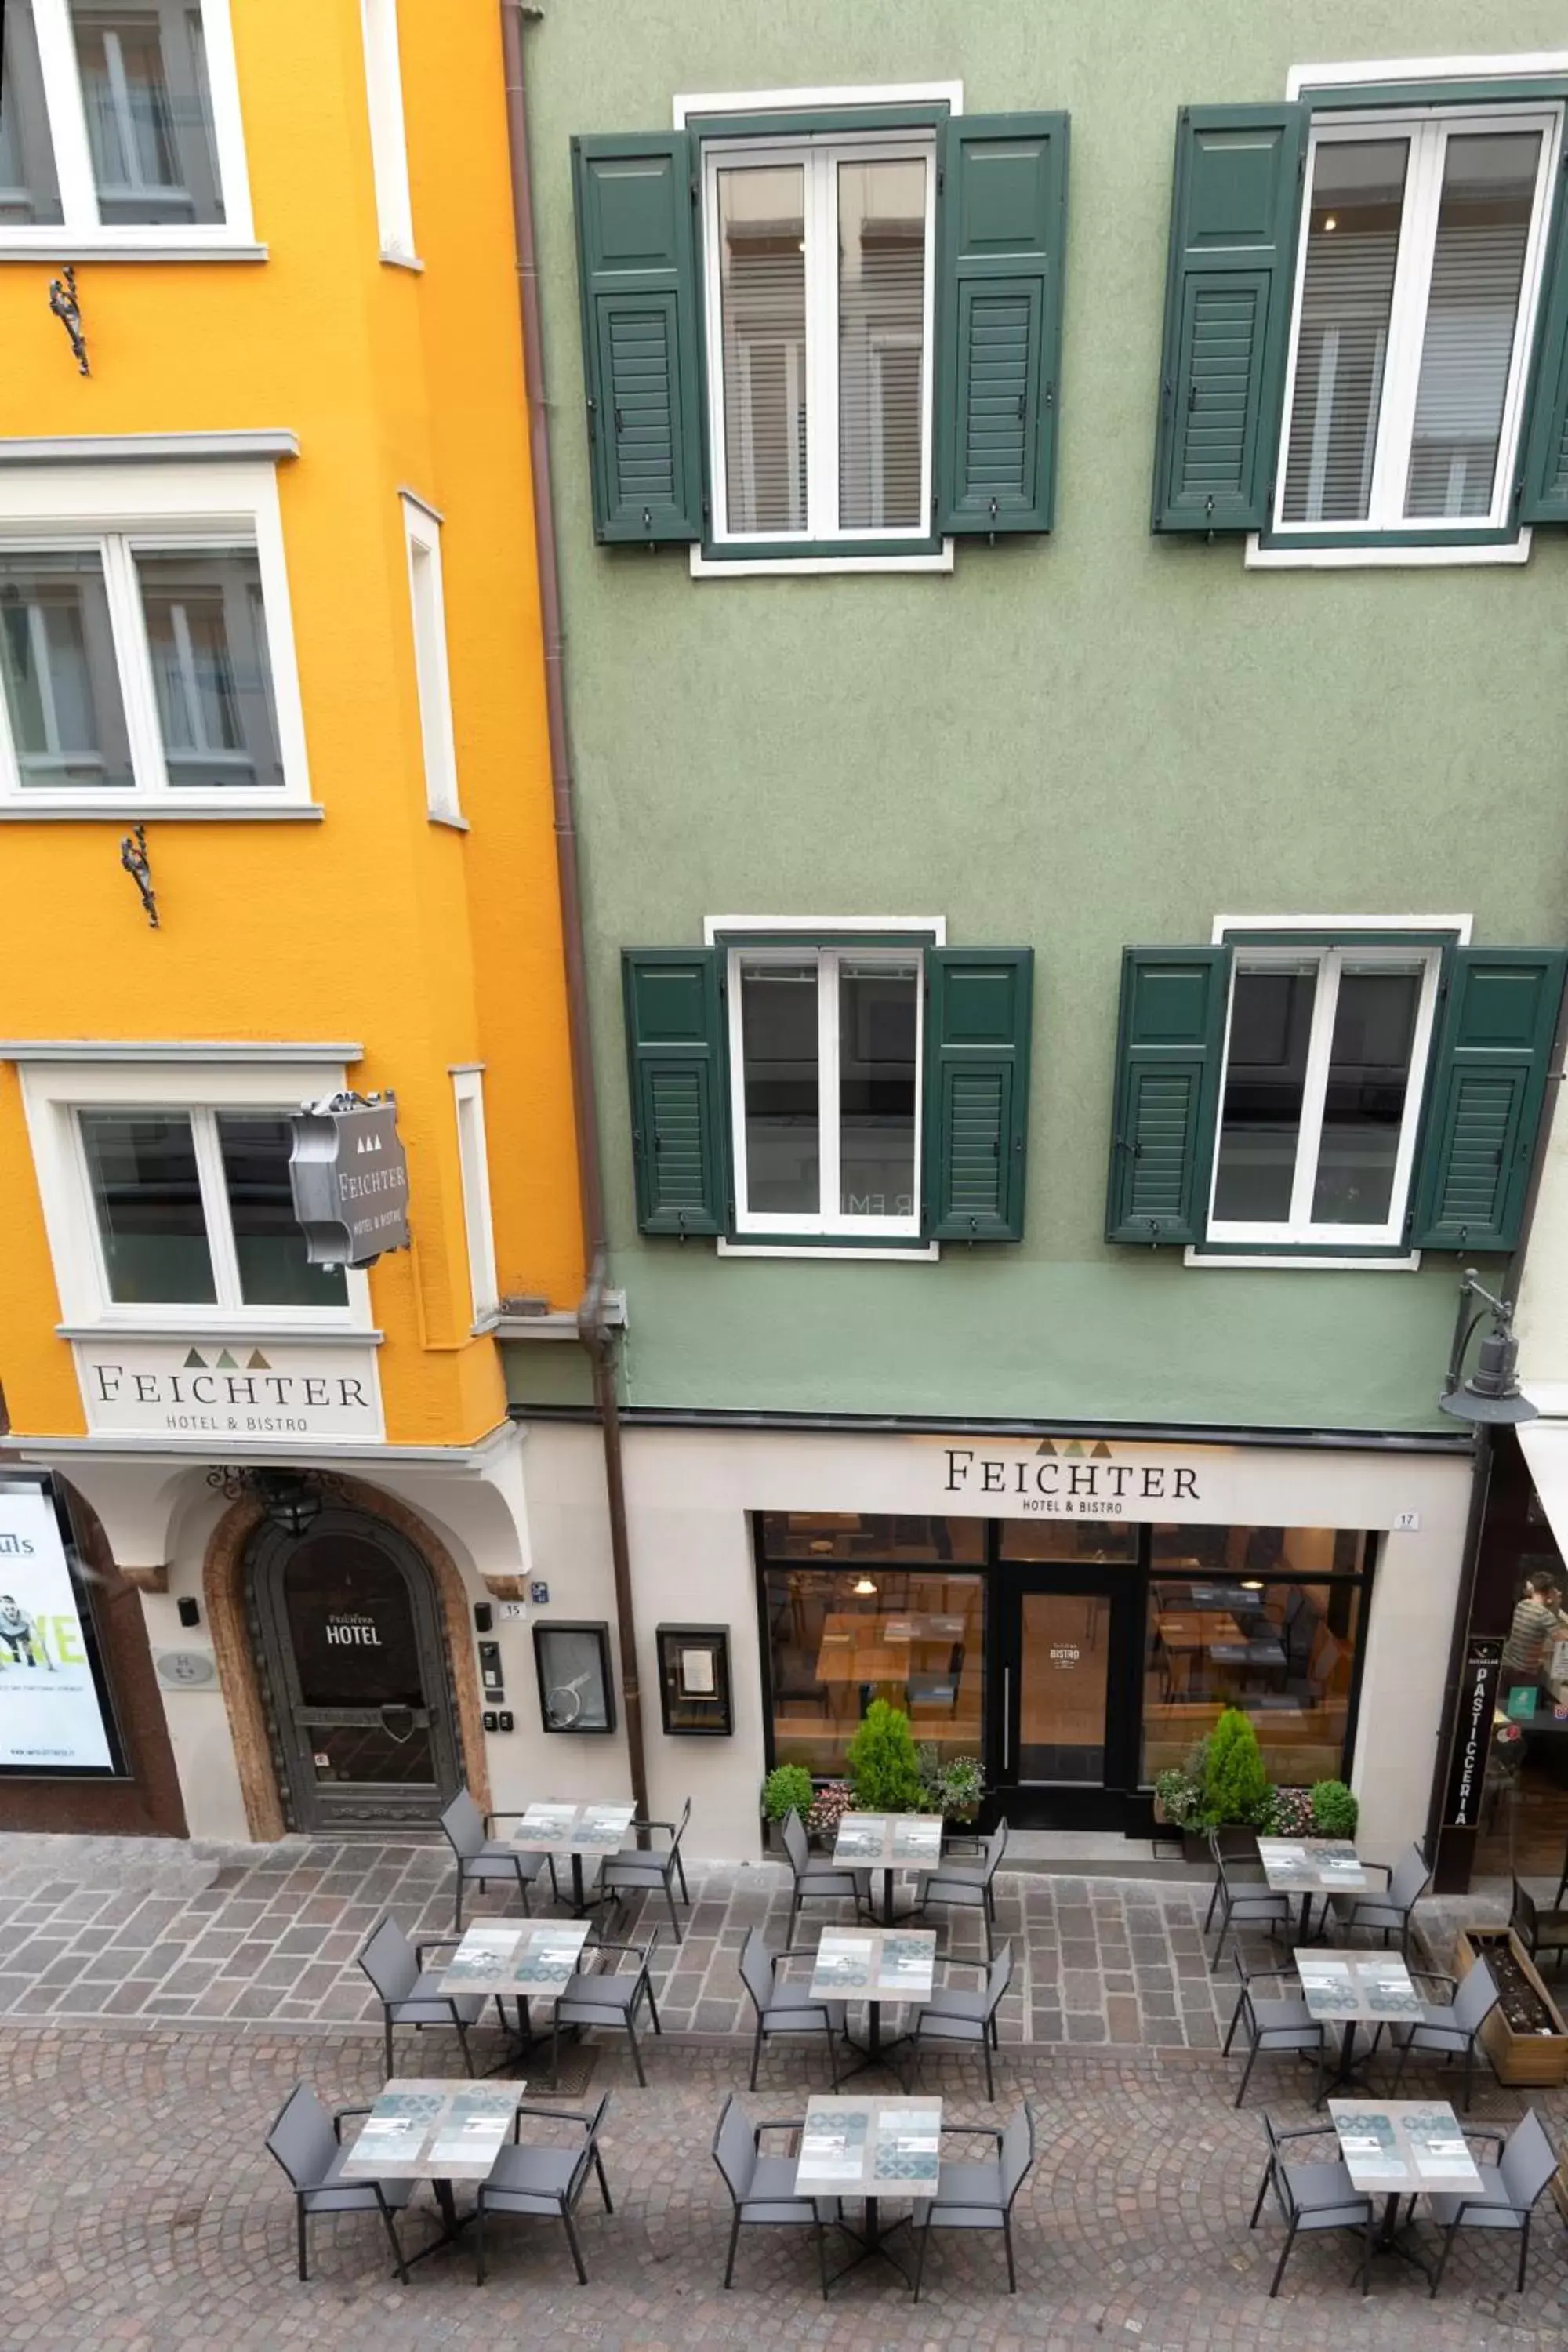 Facade/entrance in Feichter Hotel & Bistro